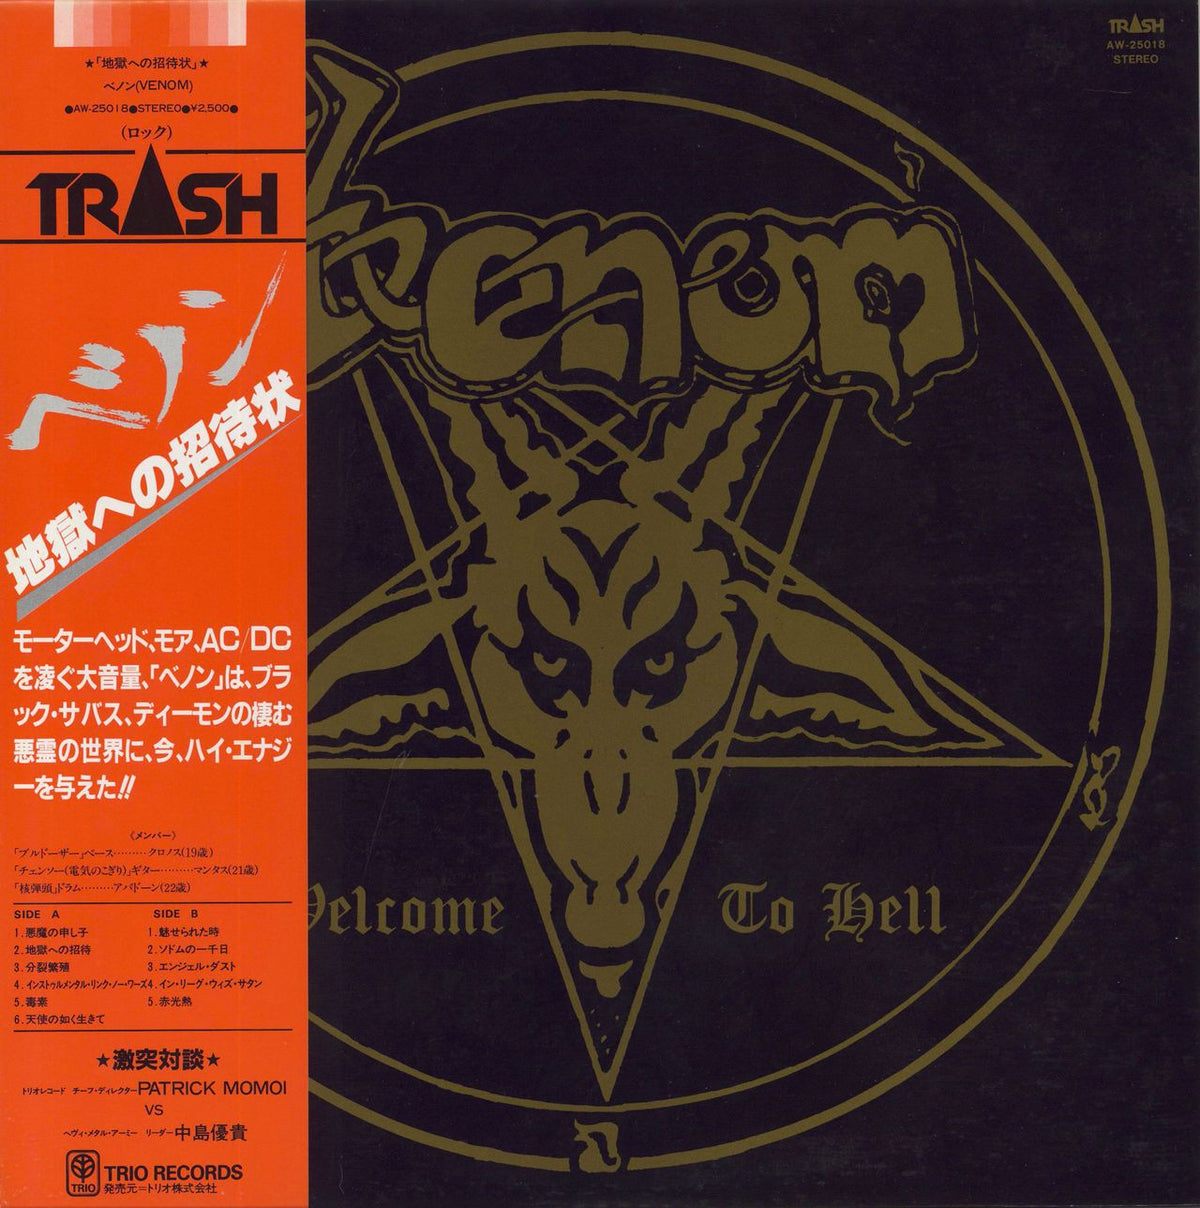 Venom Welcome To Hell + Obi Japanese Vinyl LP